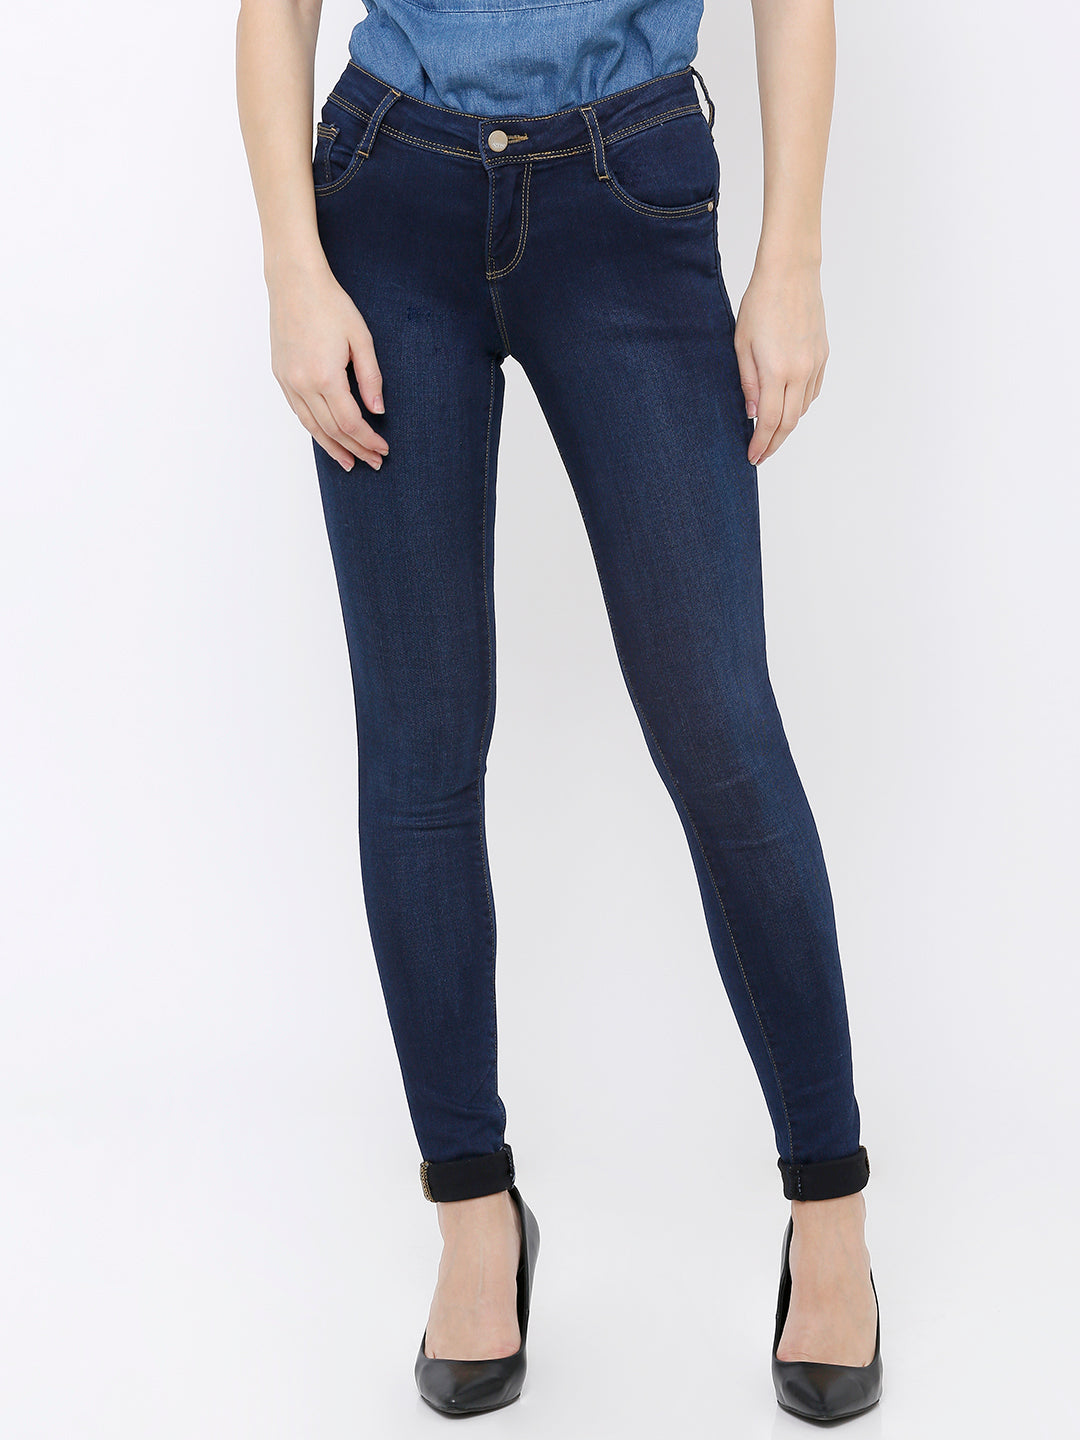 K3006 Mid-Rise Skinny Jeans - Dark Blue